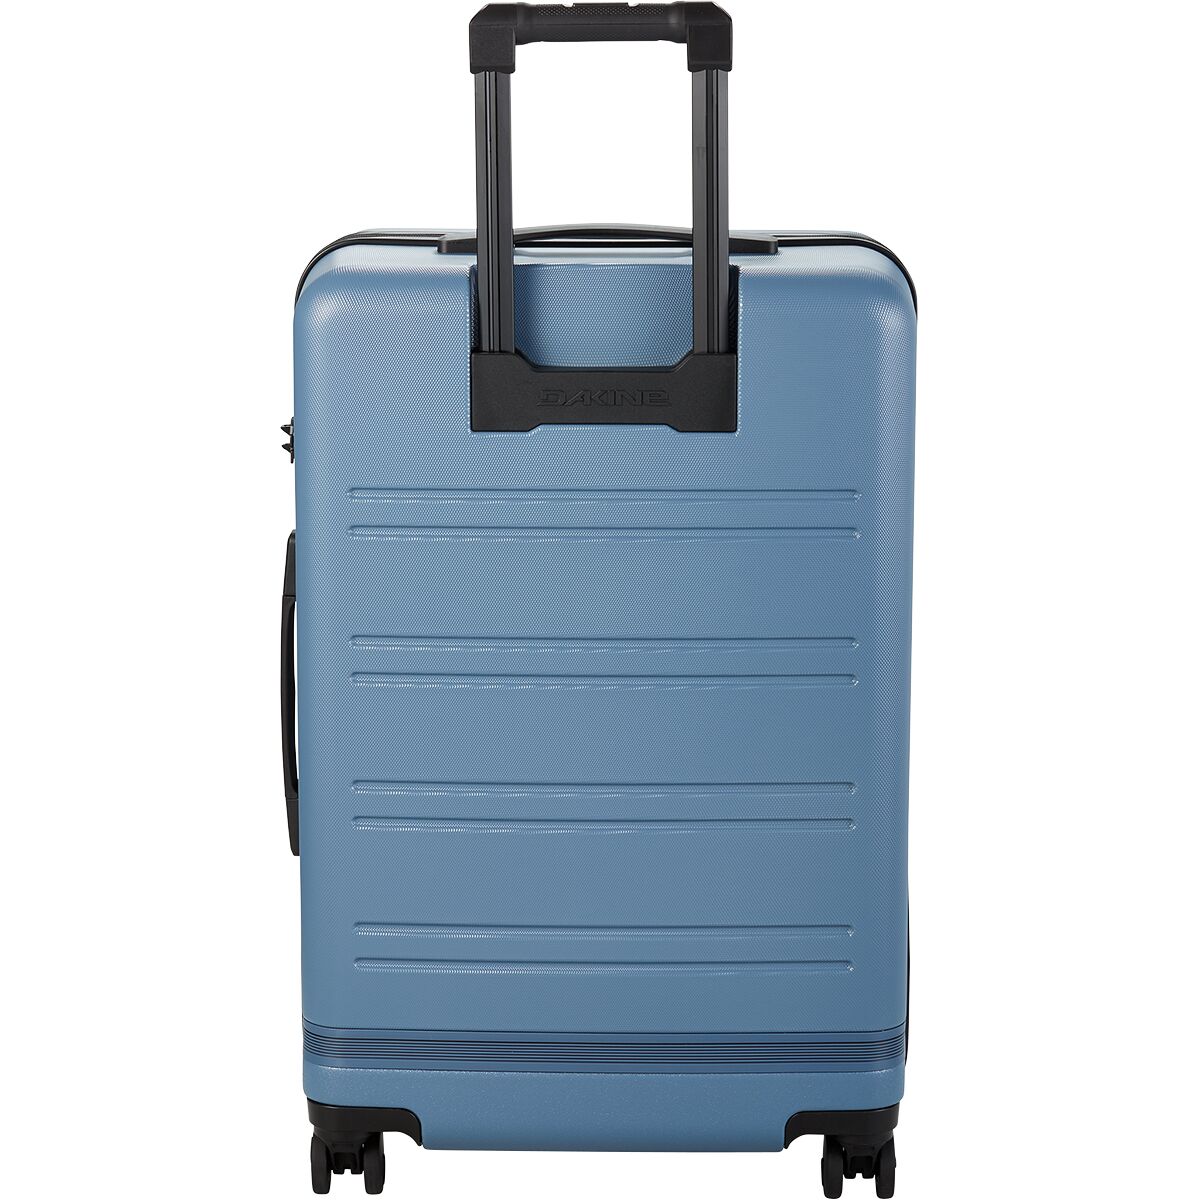 DAKINE Concourse Medium 65L Hardside Luggage - Travel